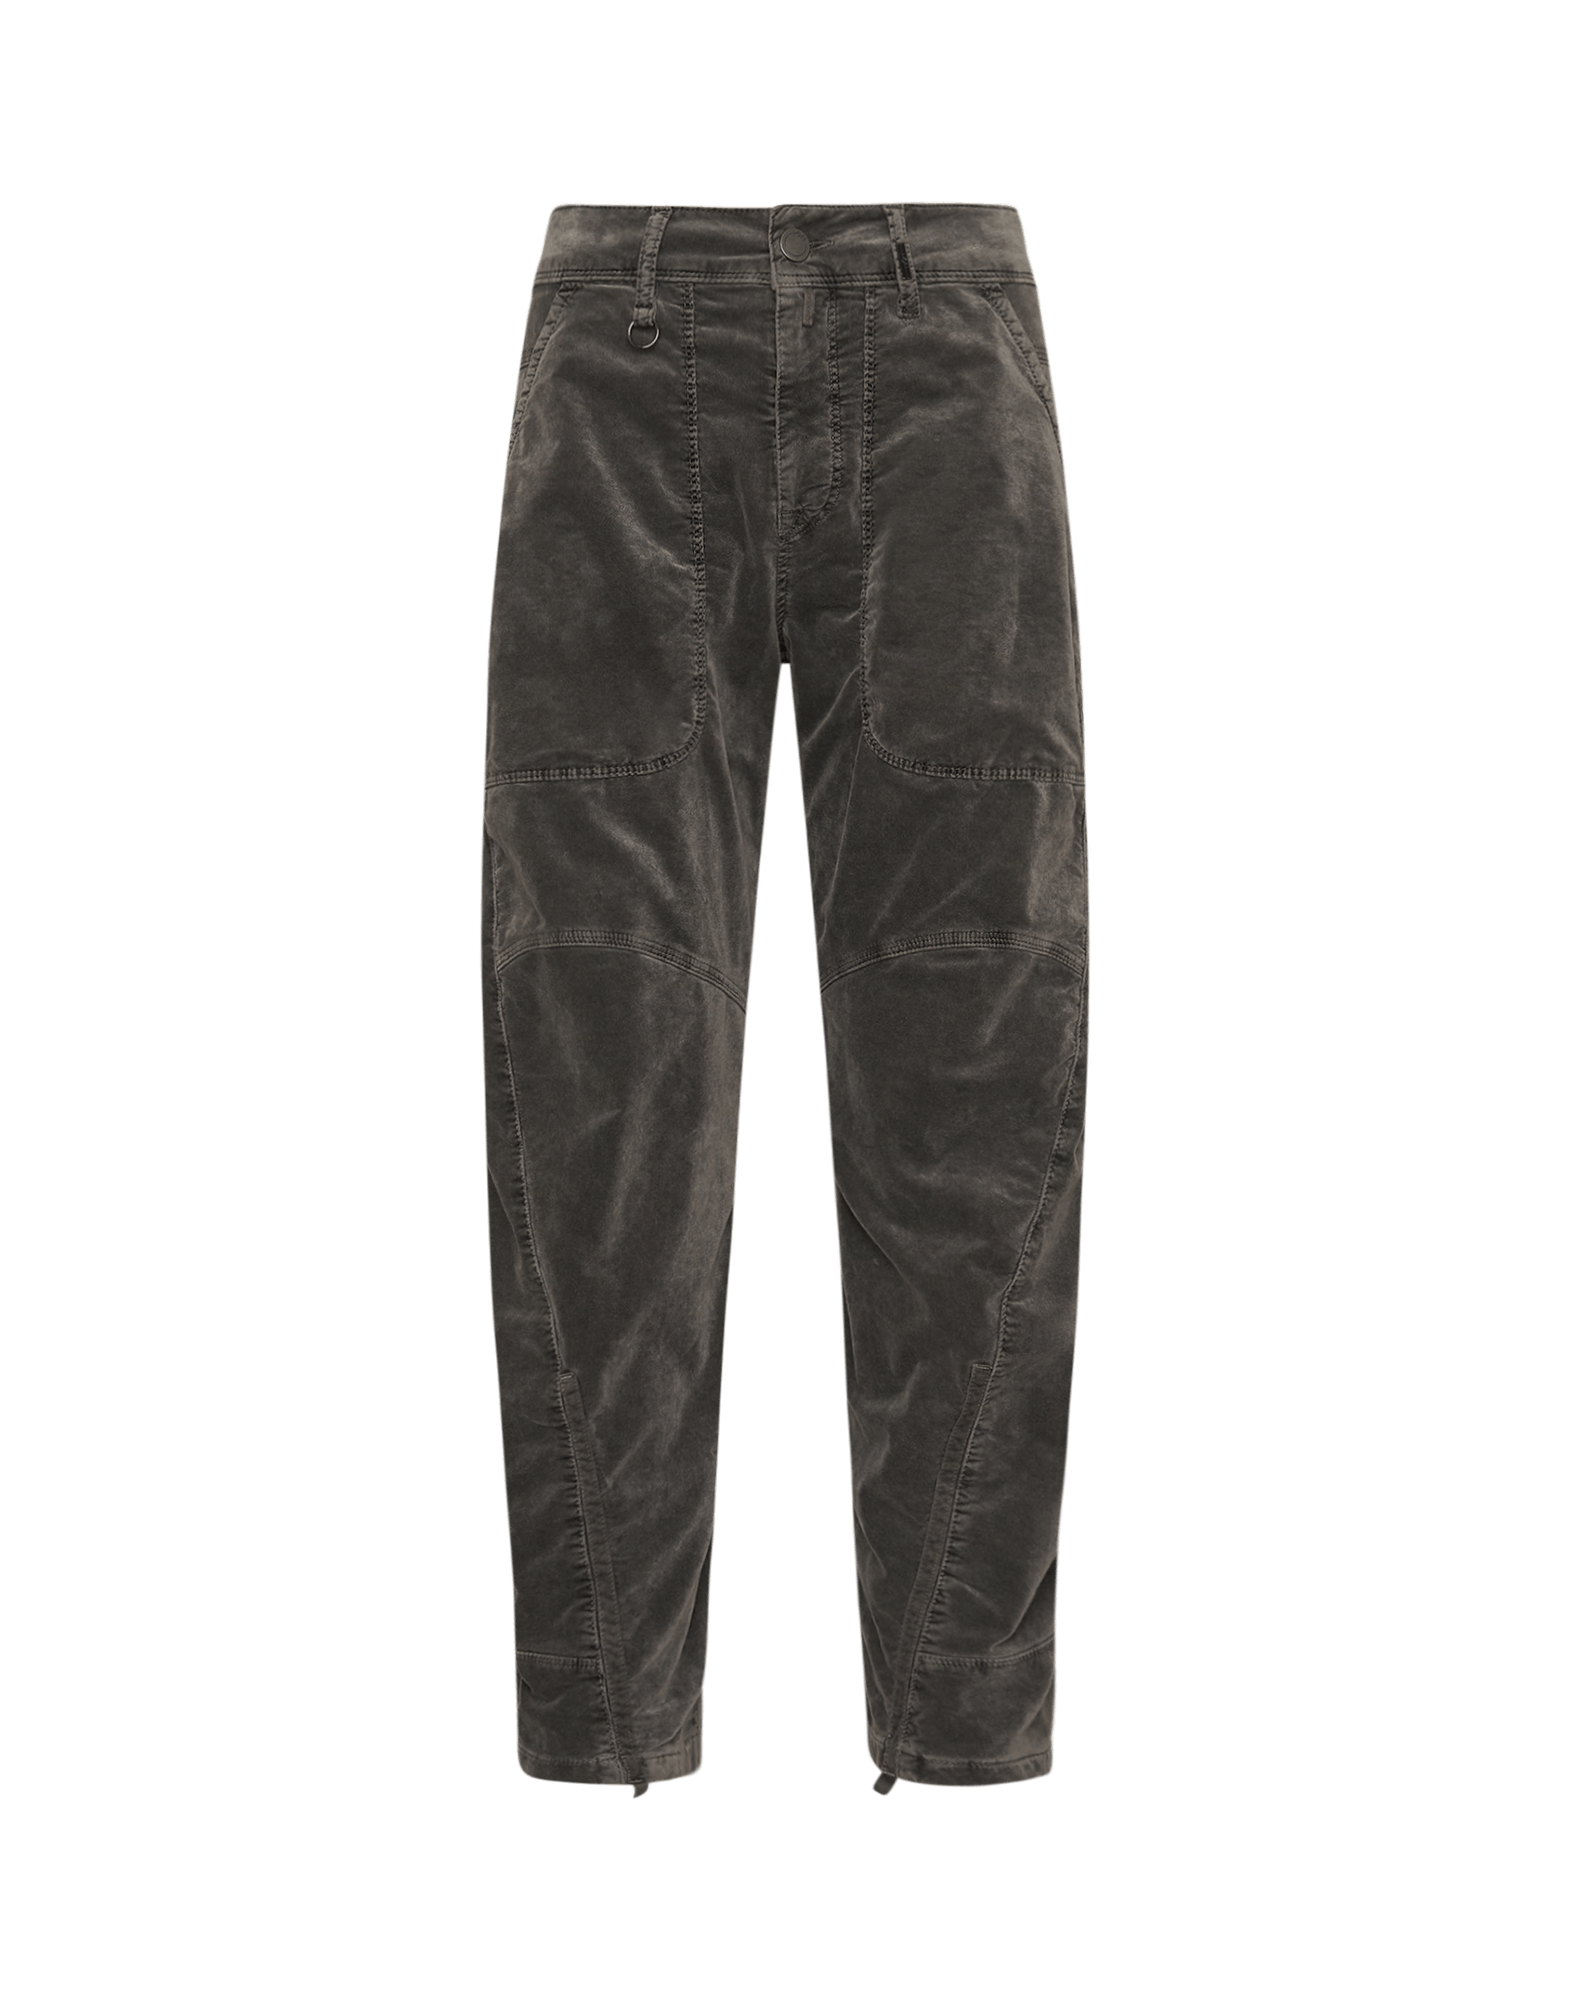 VENTURE: Cargo style pants in grey velour